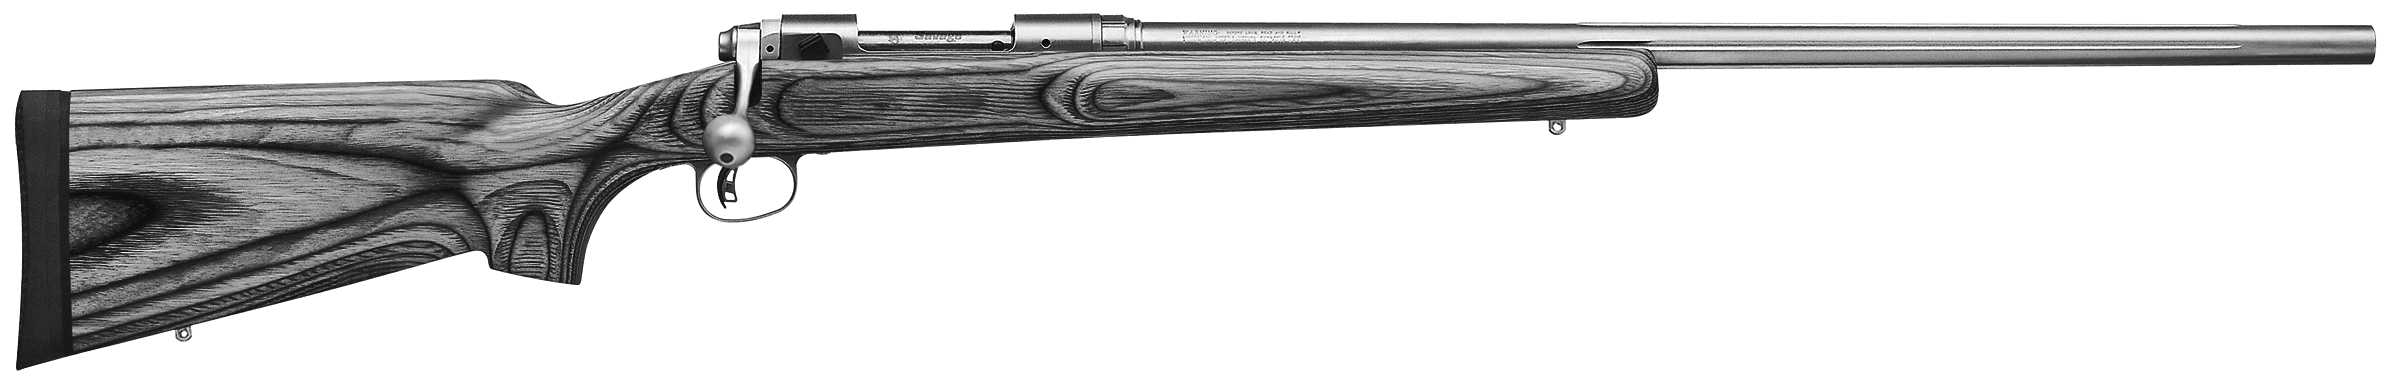 Model 12 Varminter Low Profile